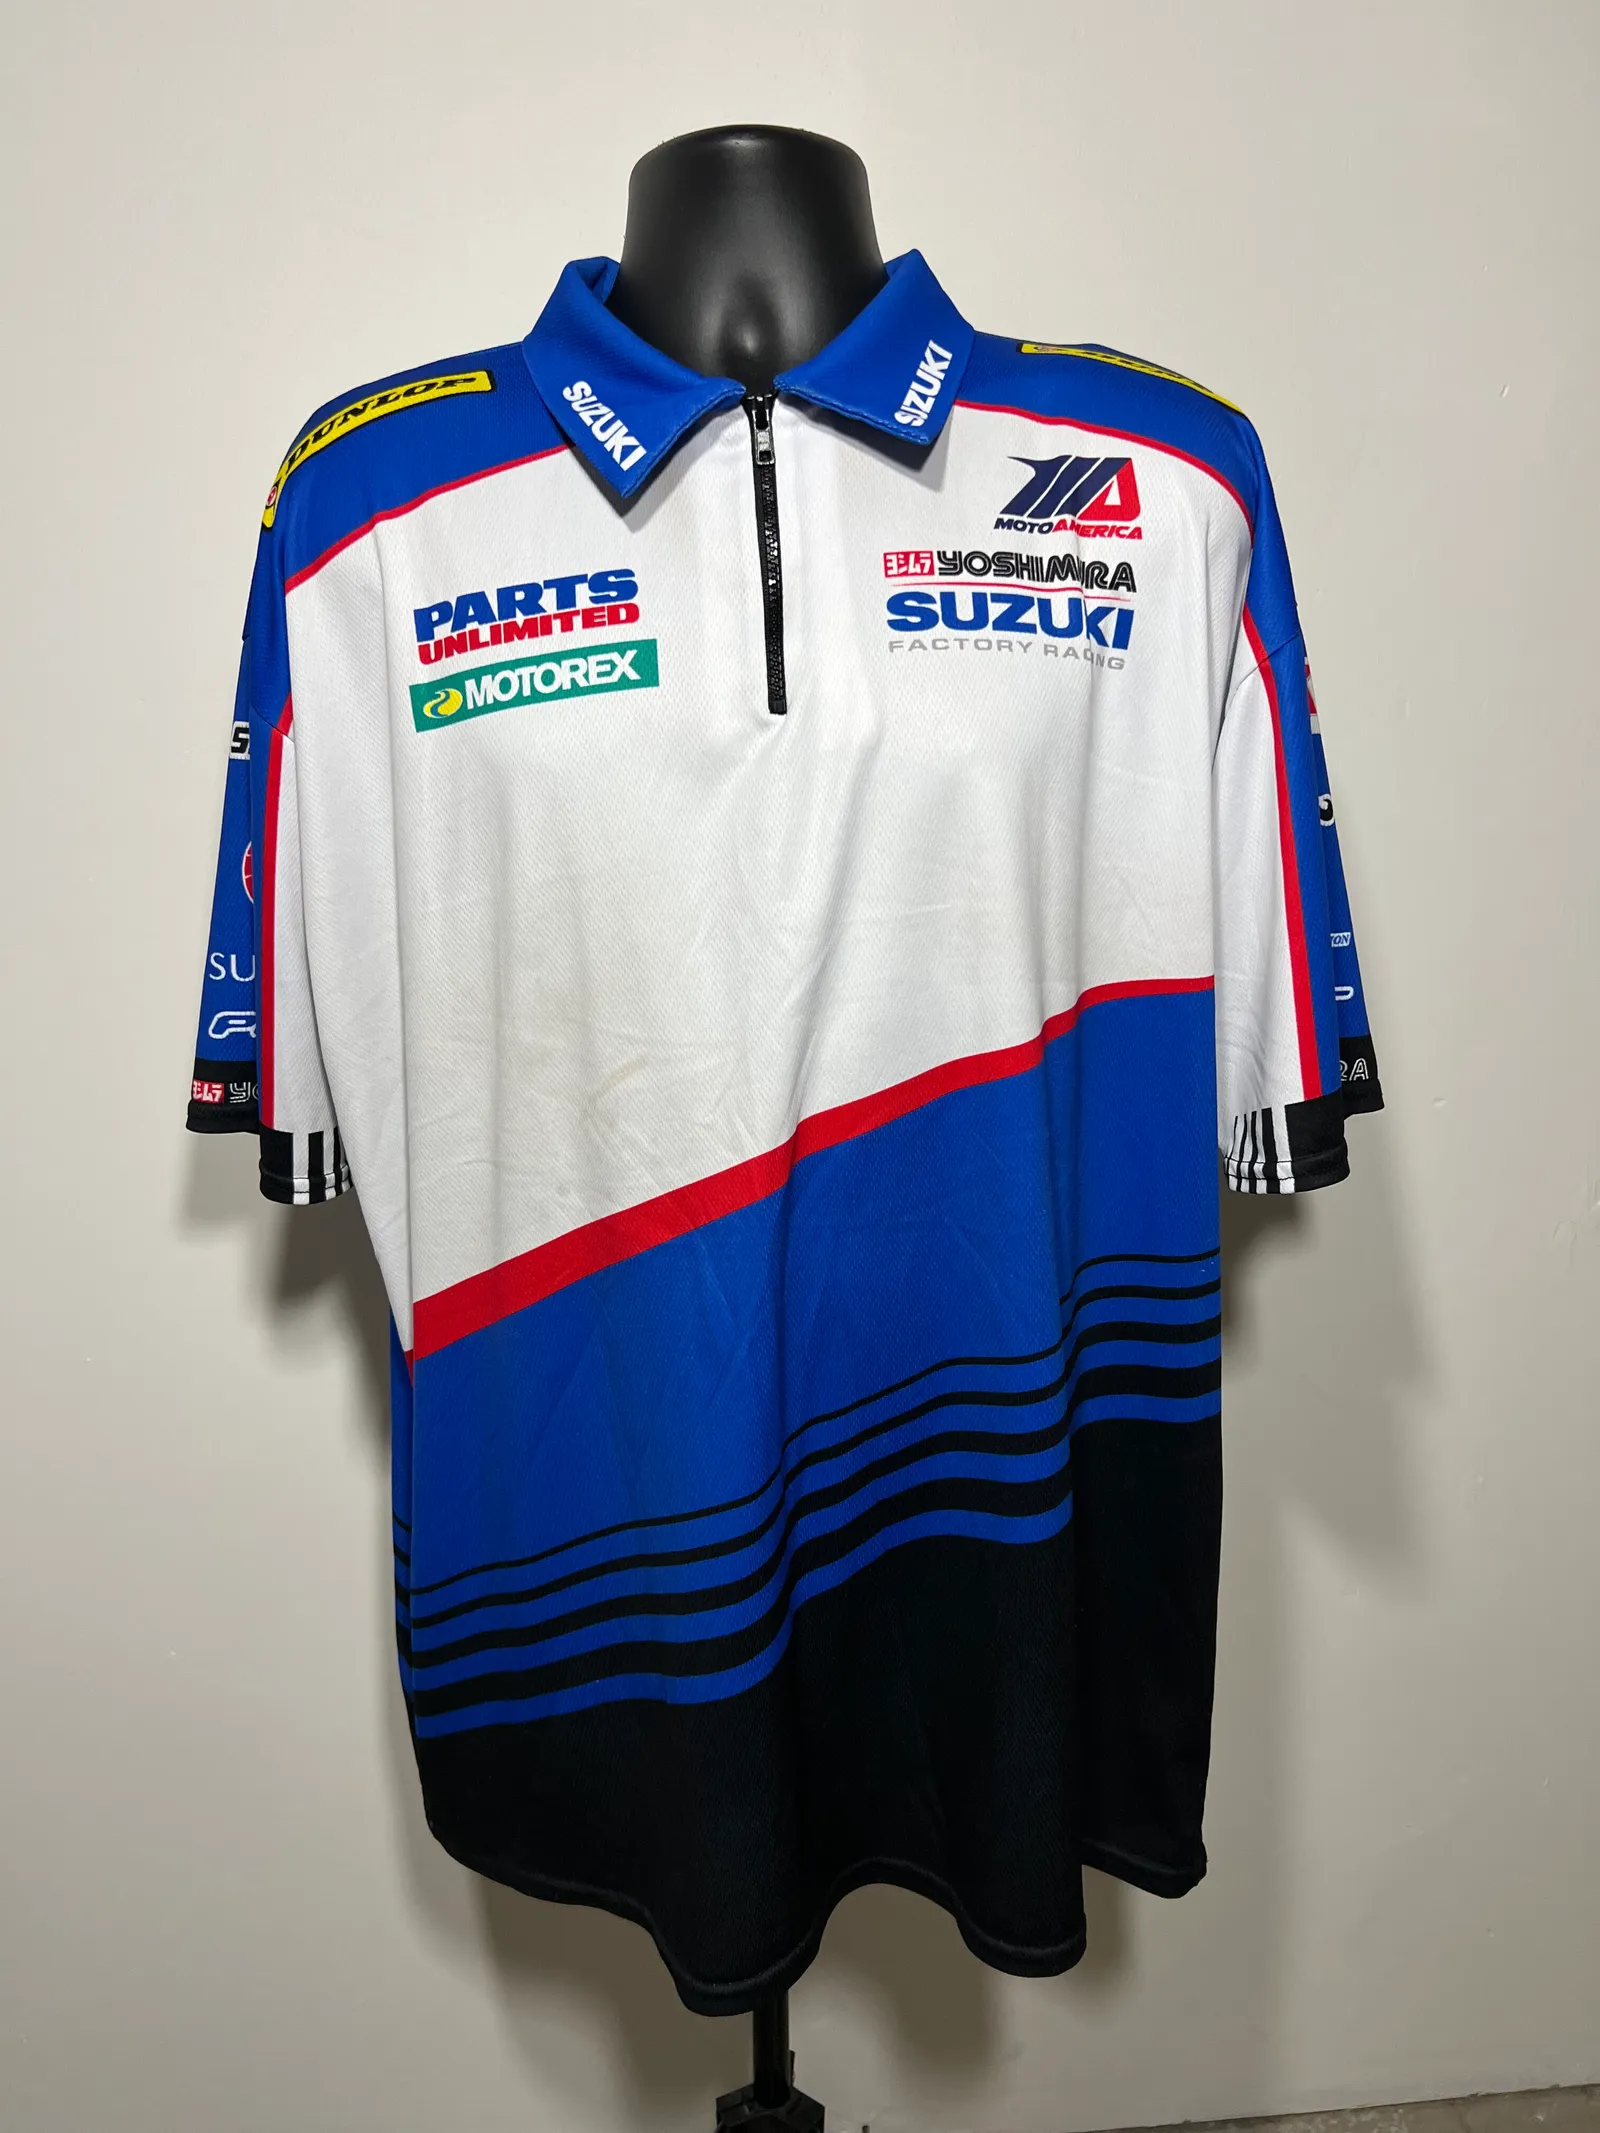 Motoamerica Yoshimura Suzuki  Factory Racing Team Shirt